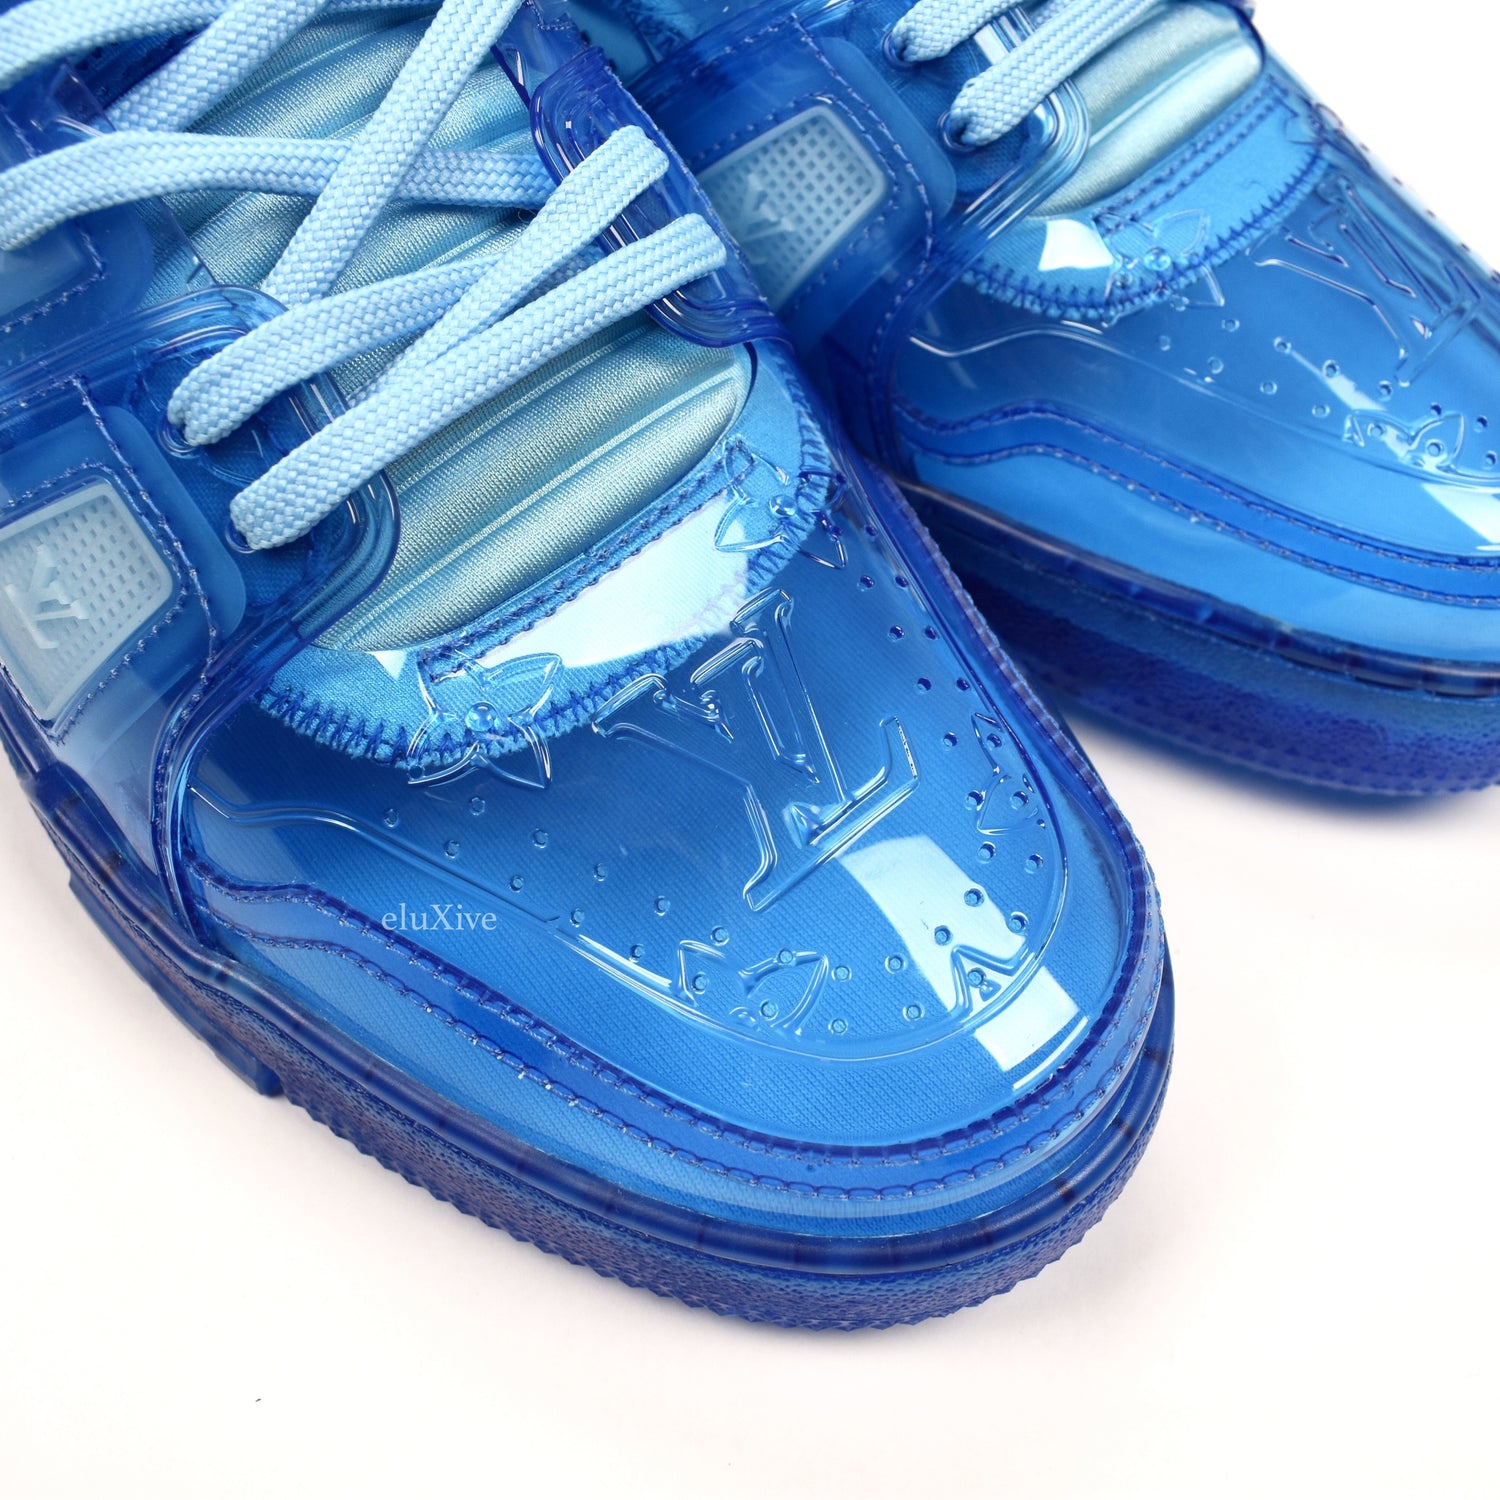 NWT Louis Vuitton Men's Transparent Clear Trainer Sneakers